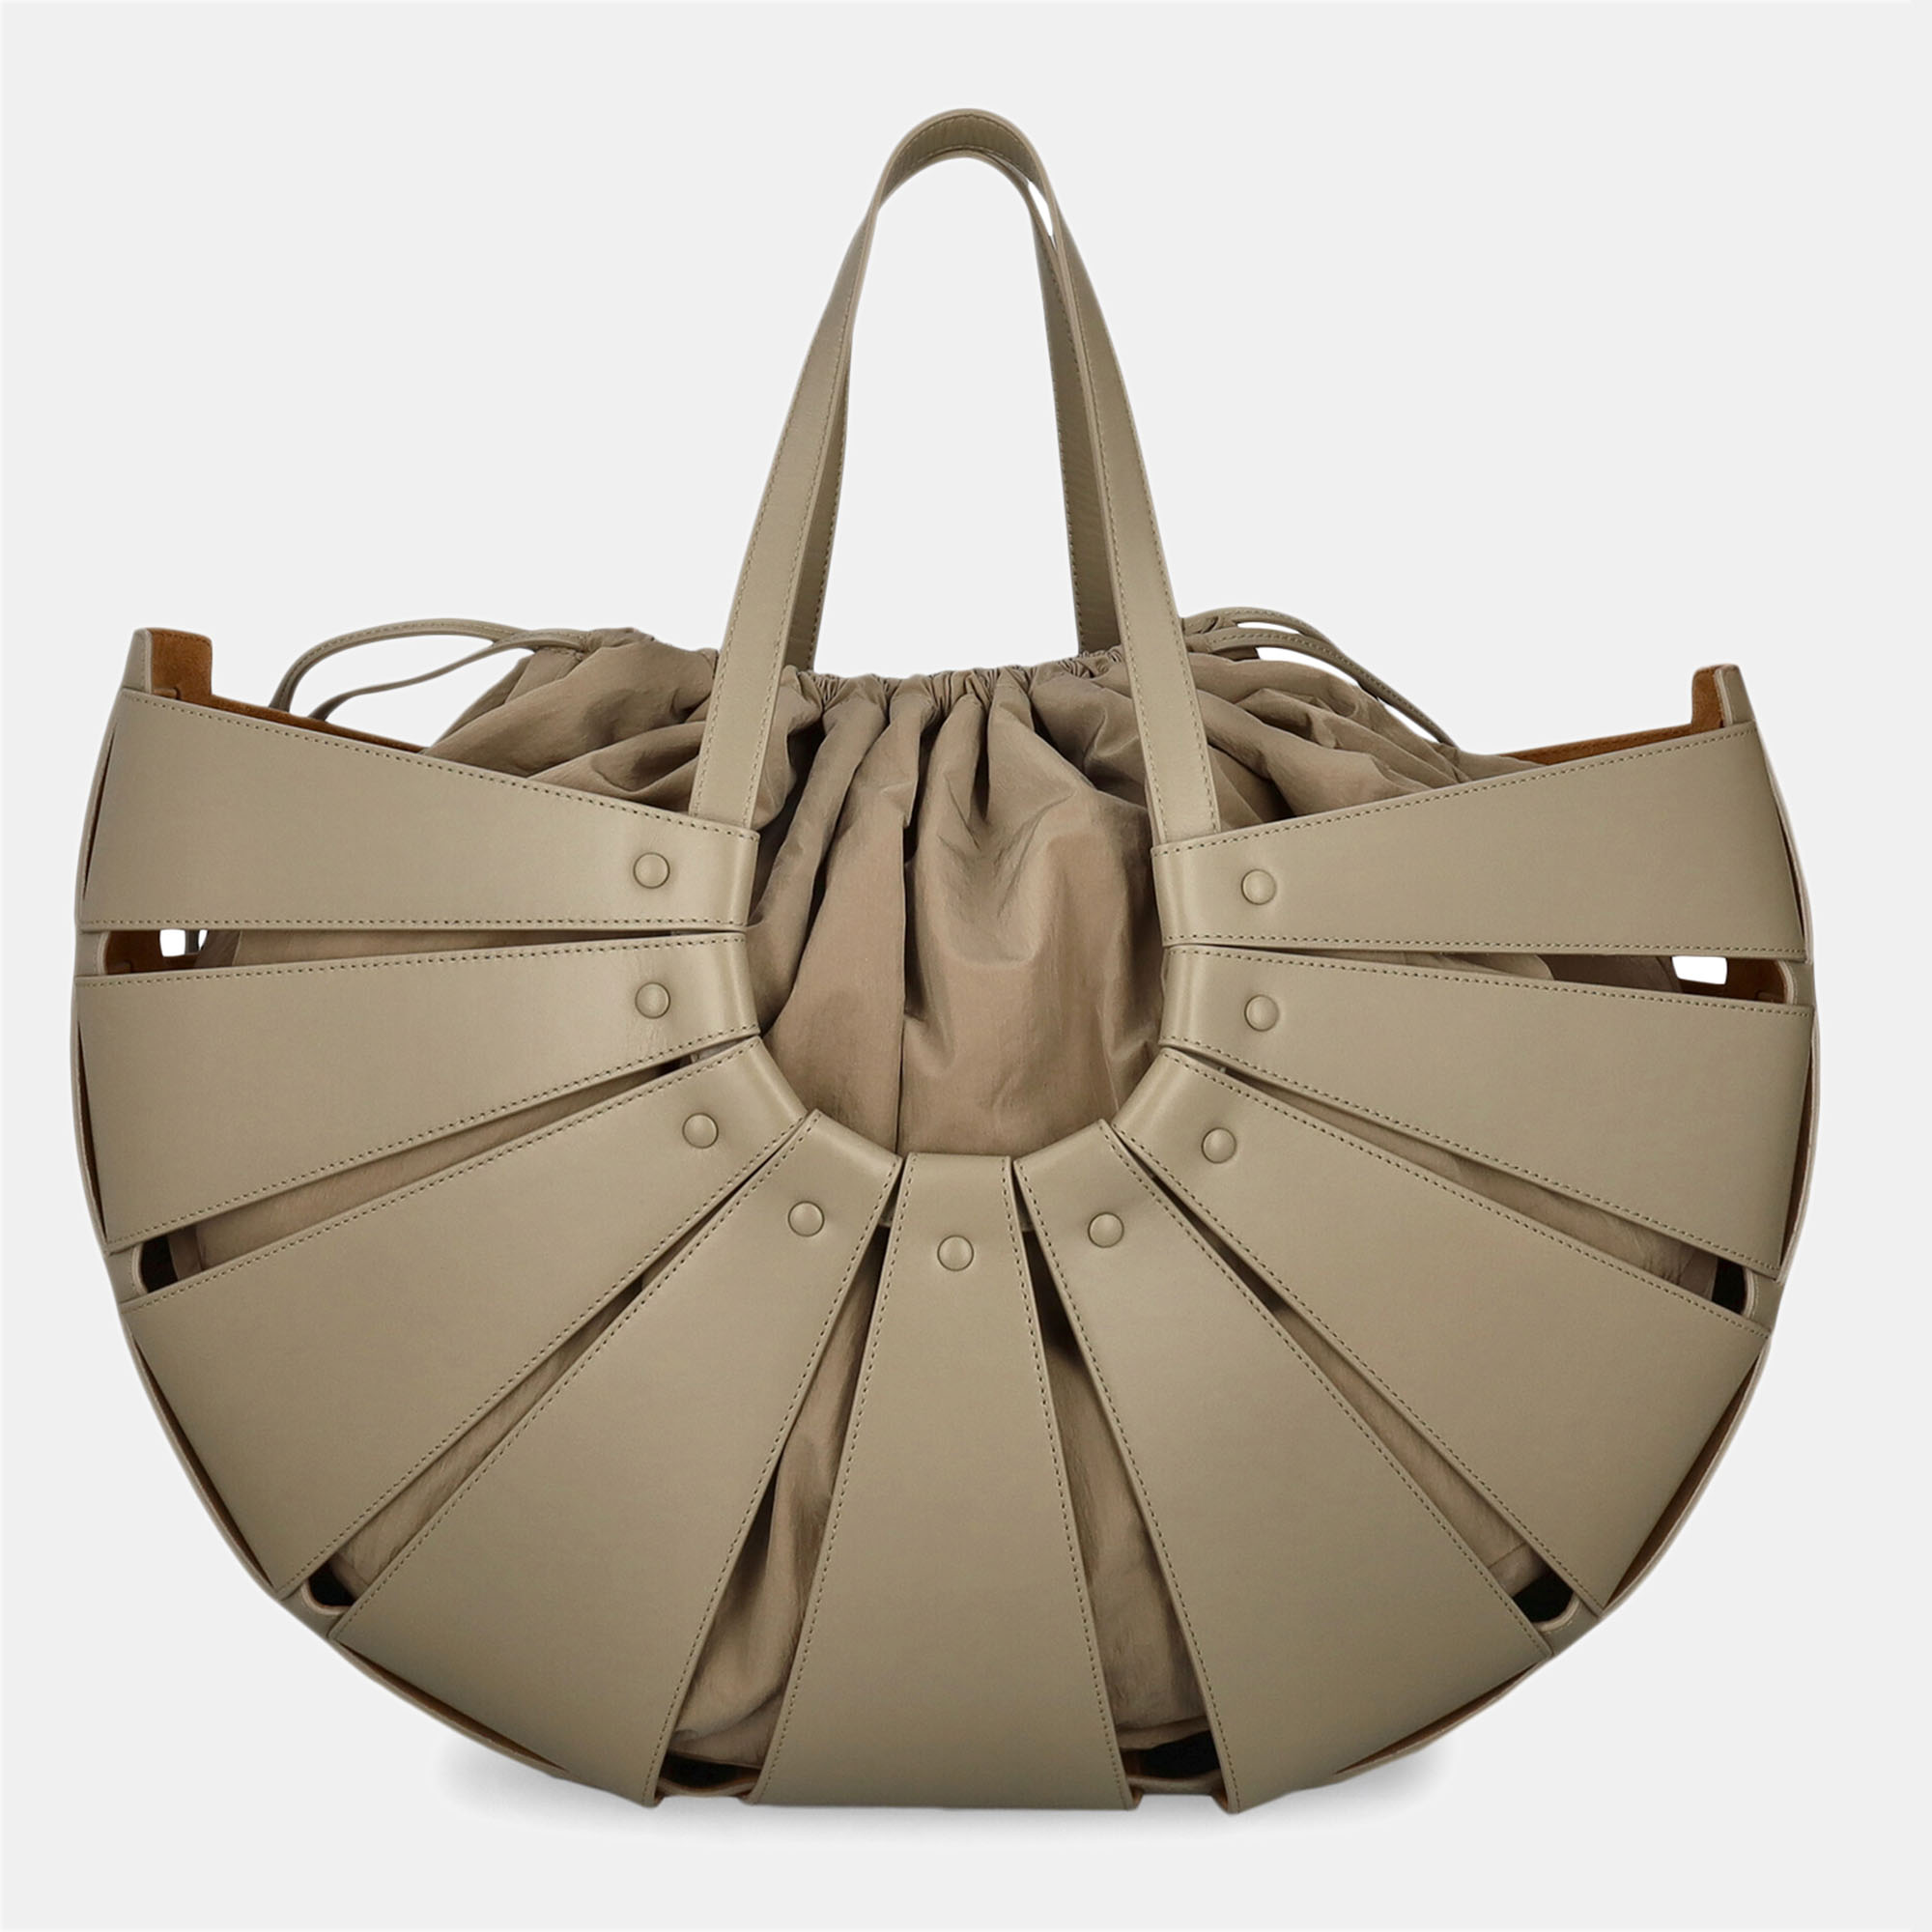 Bottega Veneta Women's Leather Tote Bag - Grey - One Size